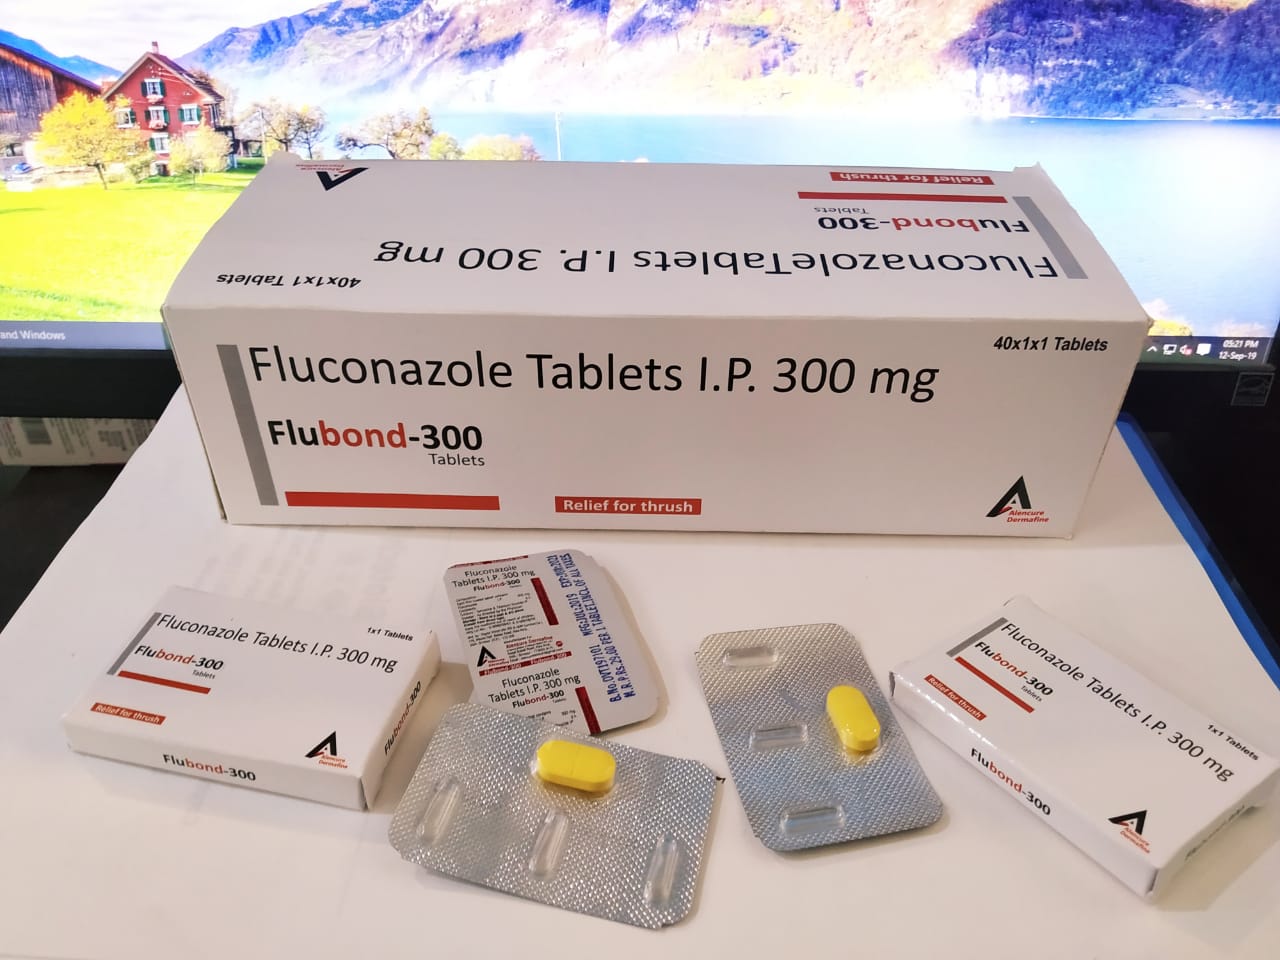 Product Name: FLUBOND 300, Compositions of FLUBOND 300 are Fluconazole Tablets IP 300mg - Alencure Biotech Pvt Ltd